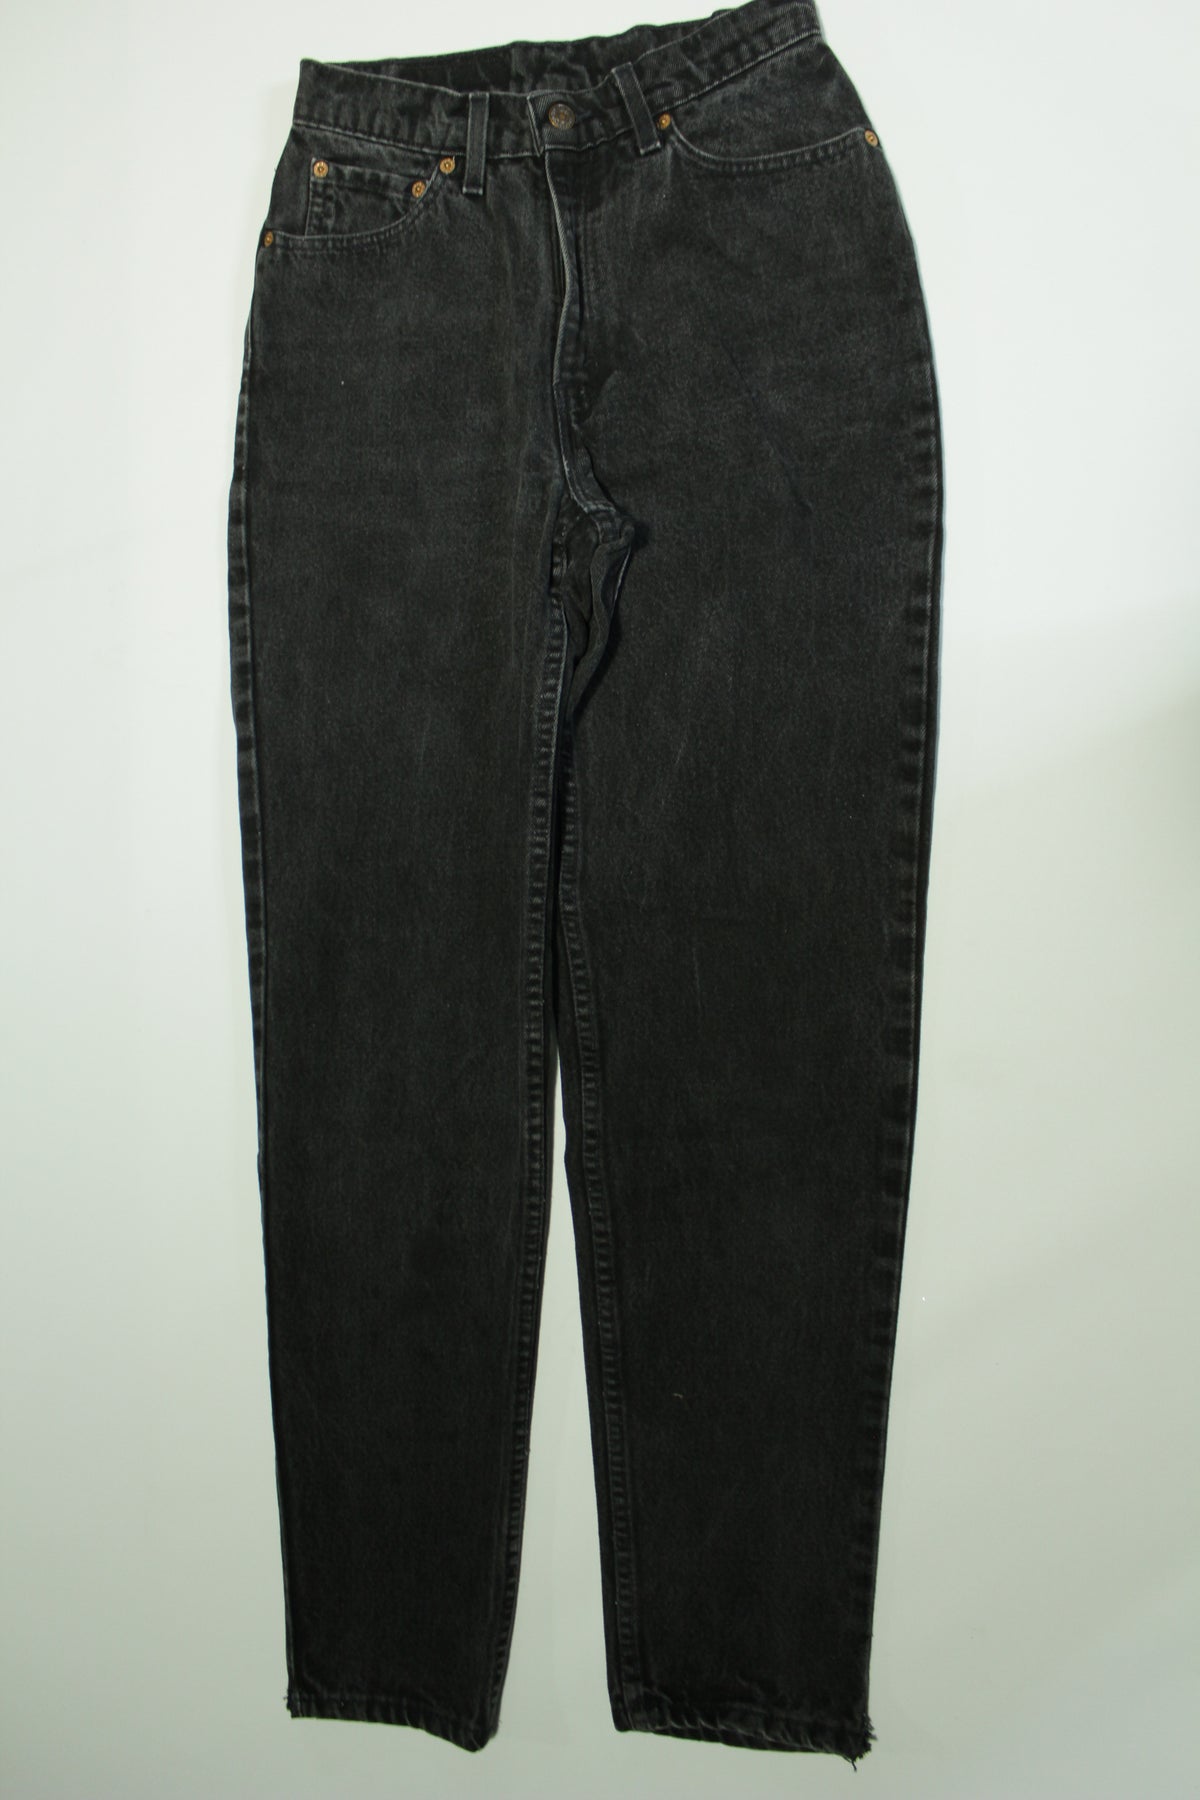 Levis 512 Vintage 90's High Rise Tapered Leg Slim Fit Denim Mom Jeans